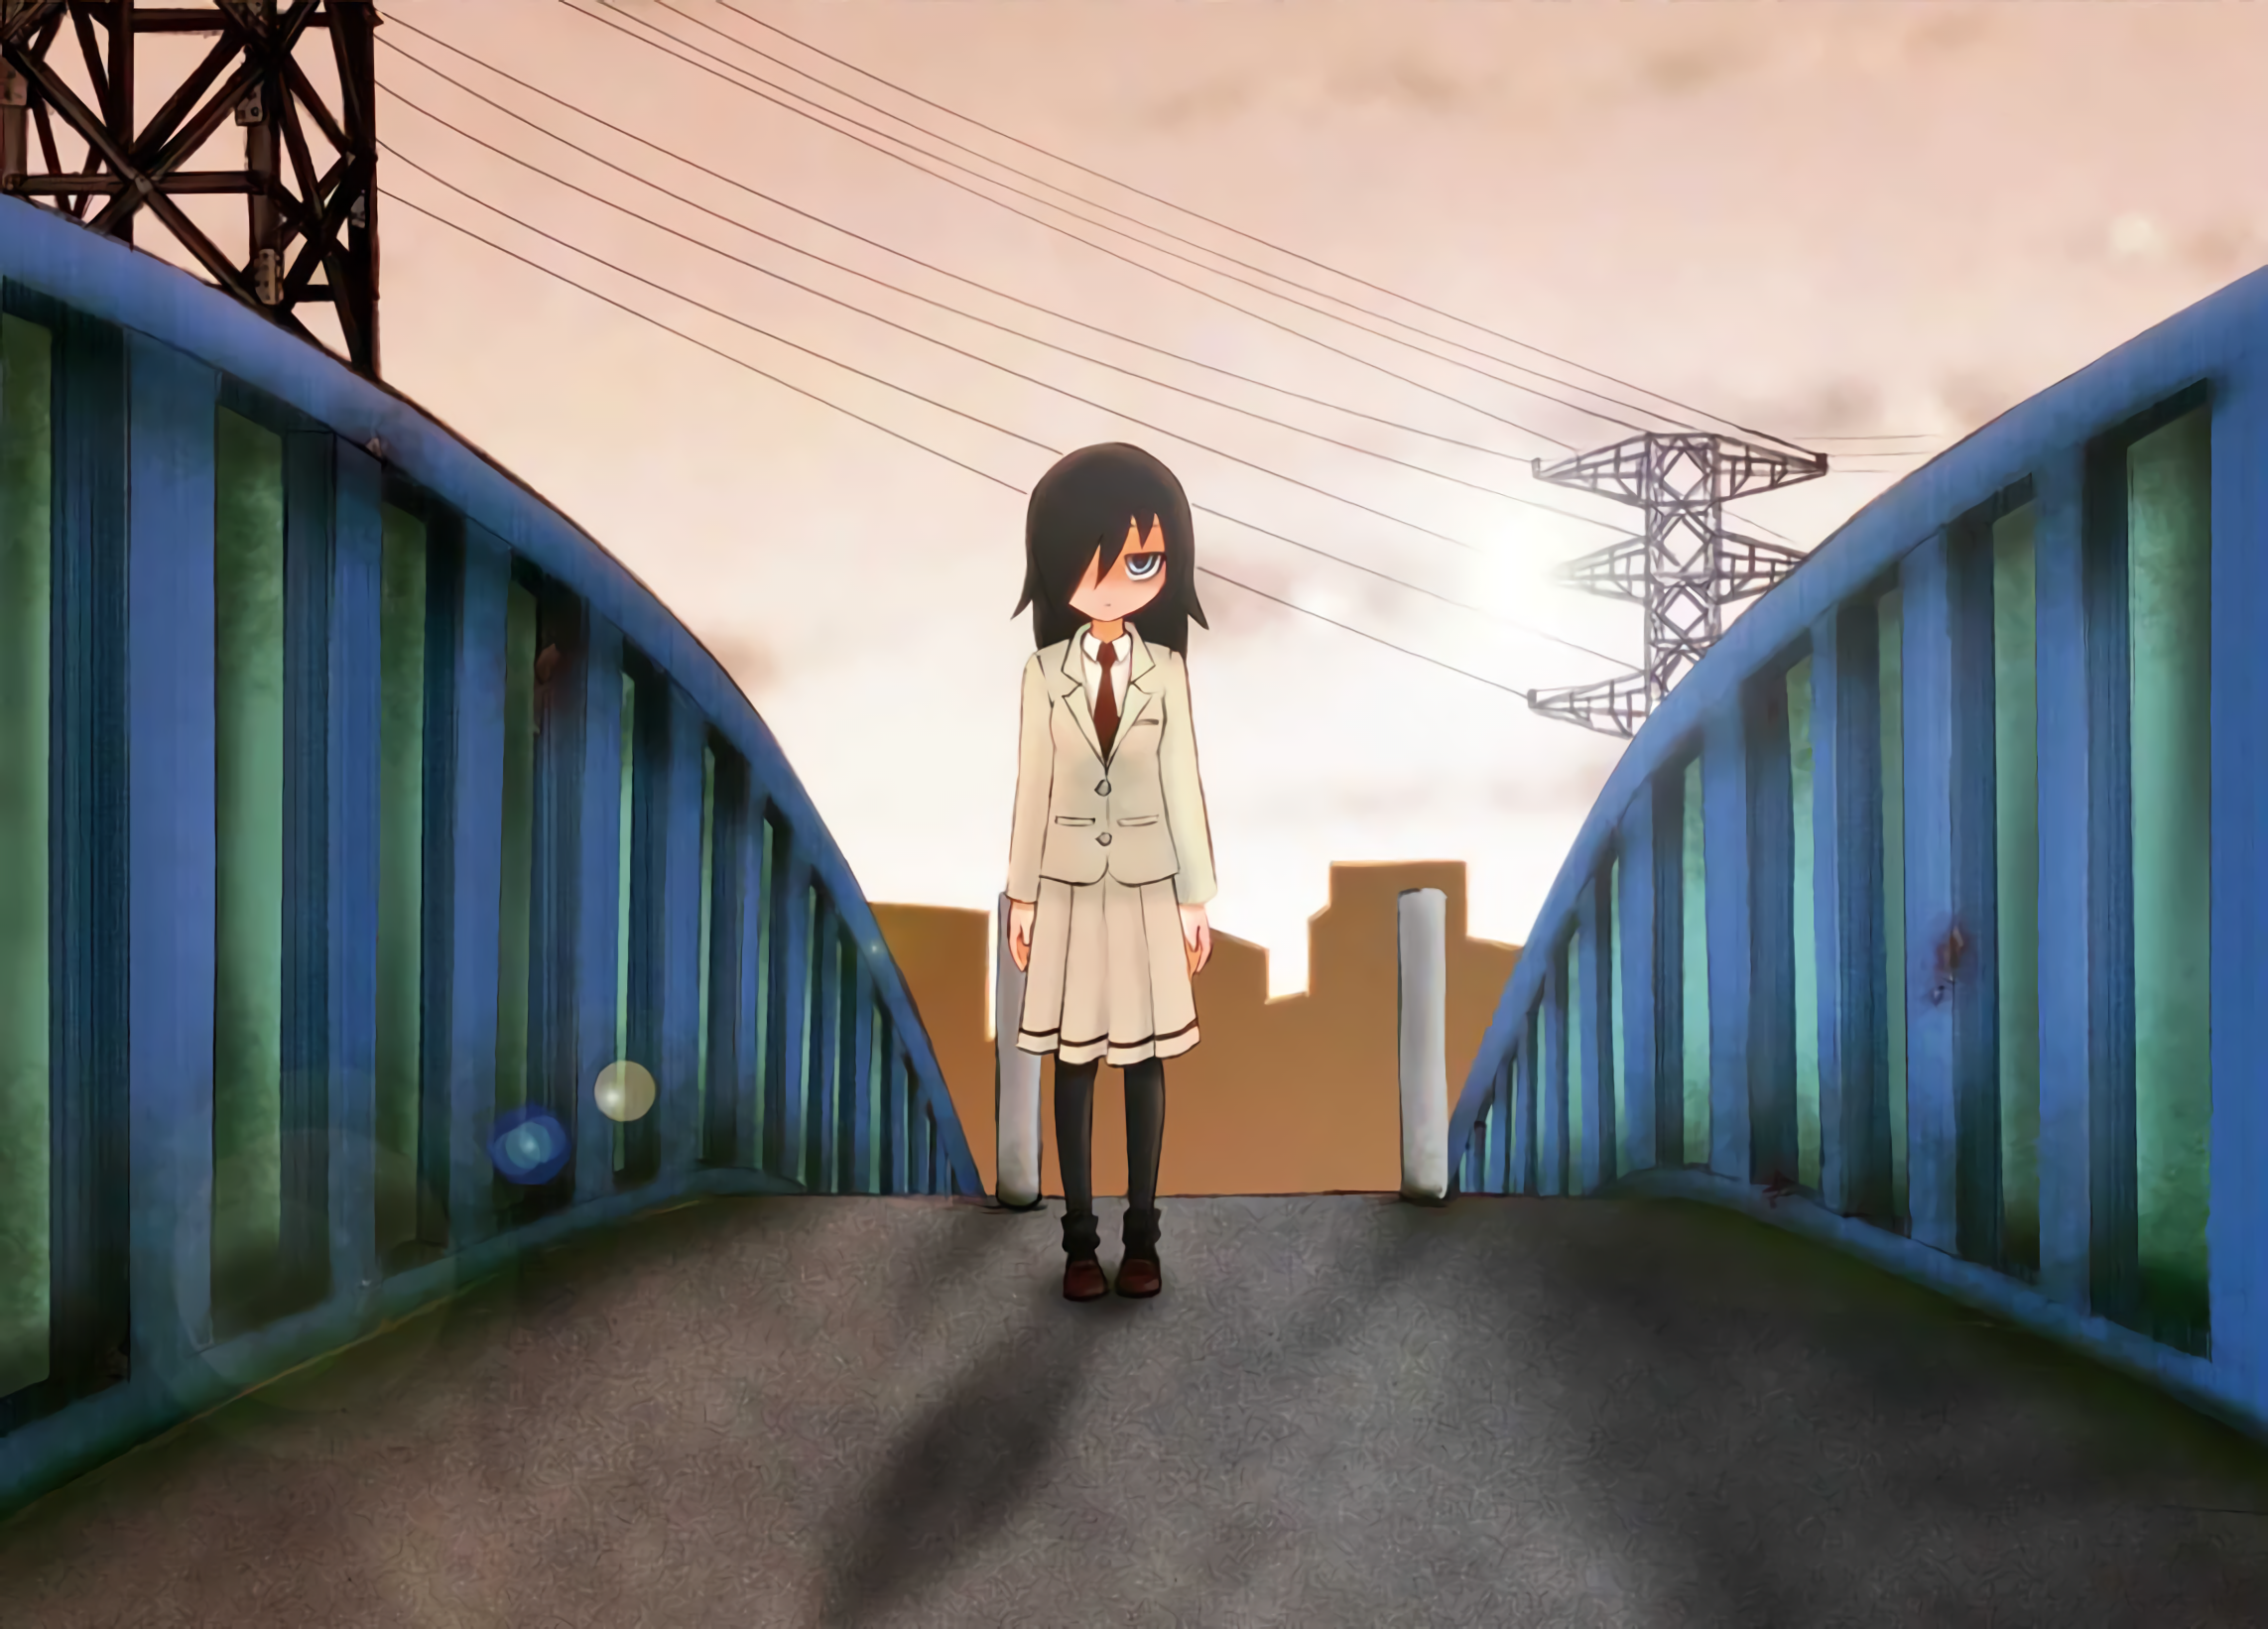 Anime Watamote HD Wallpaper | Background Image